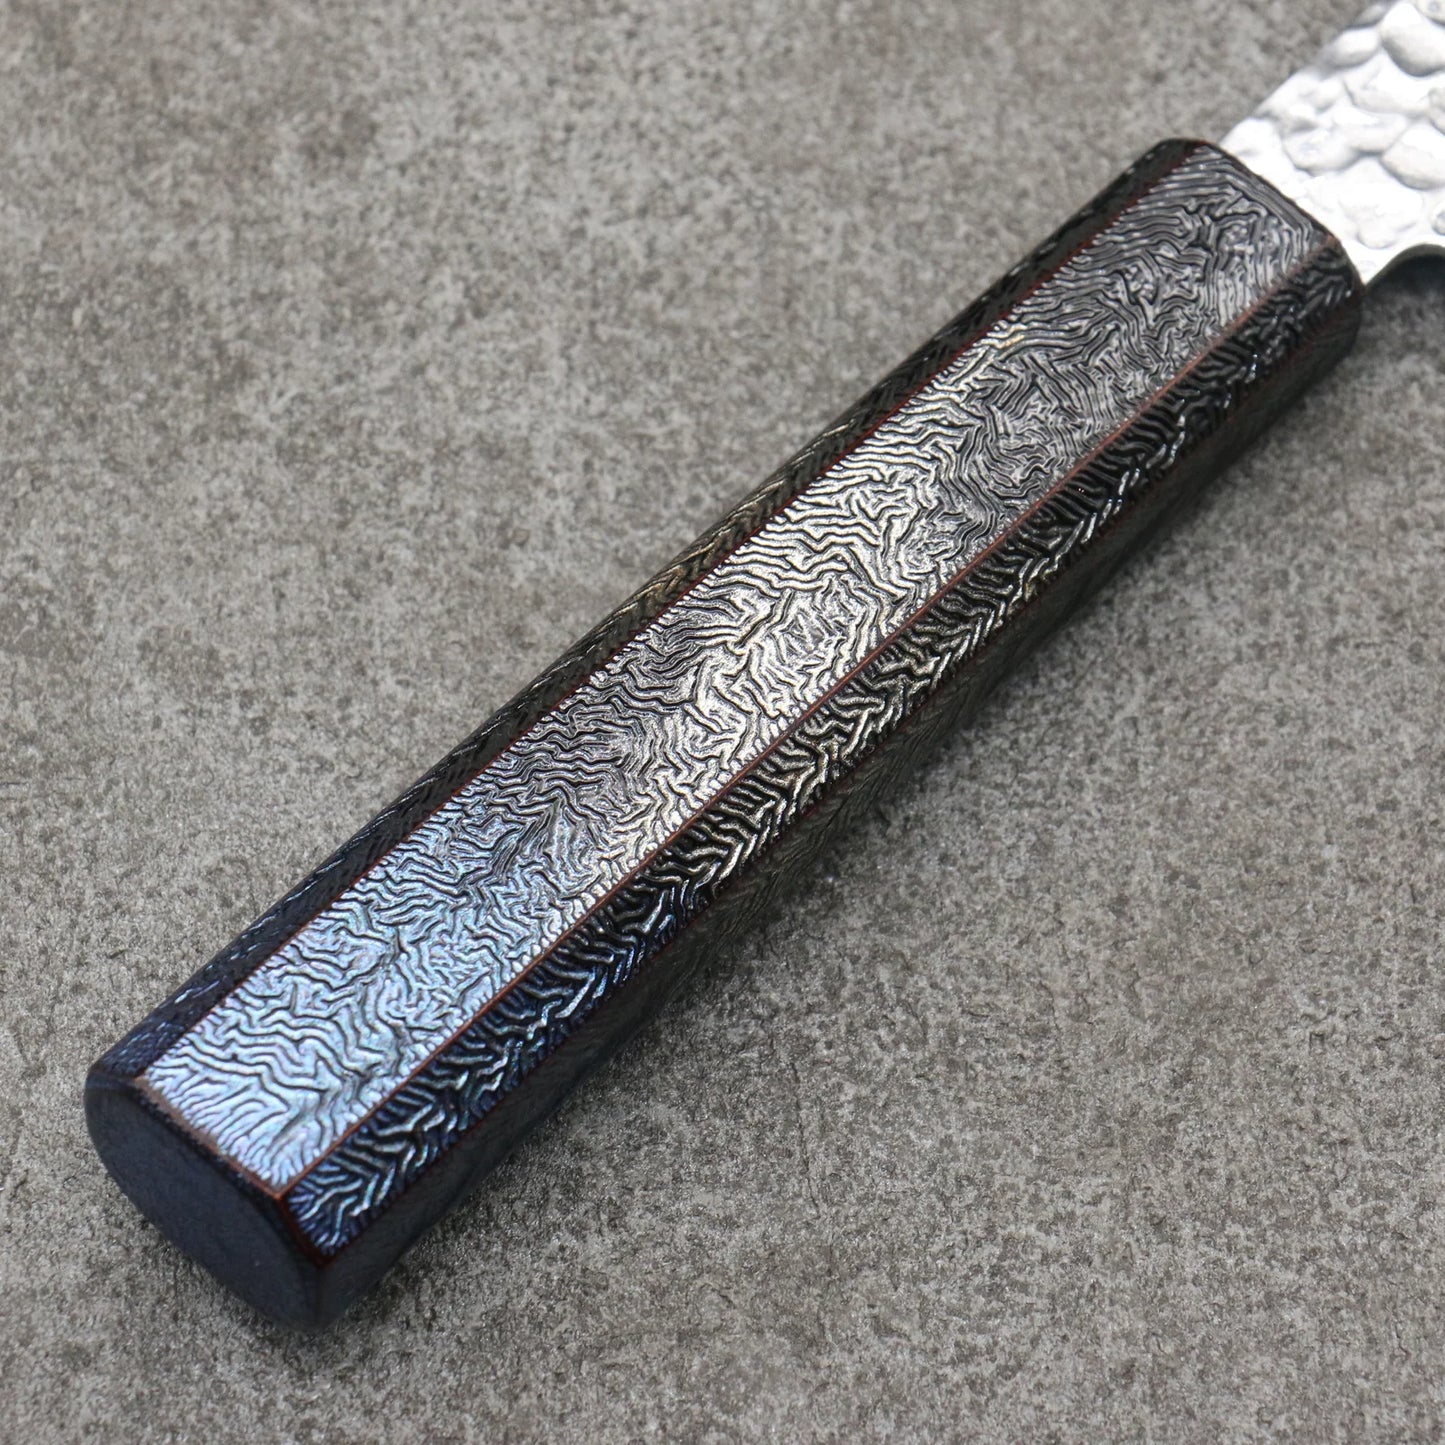 Sakai Takayuki Rinnou VG10 33 Layer Damascus Santoku Japanese Knife 170mm Blue Lacquered Handle